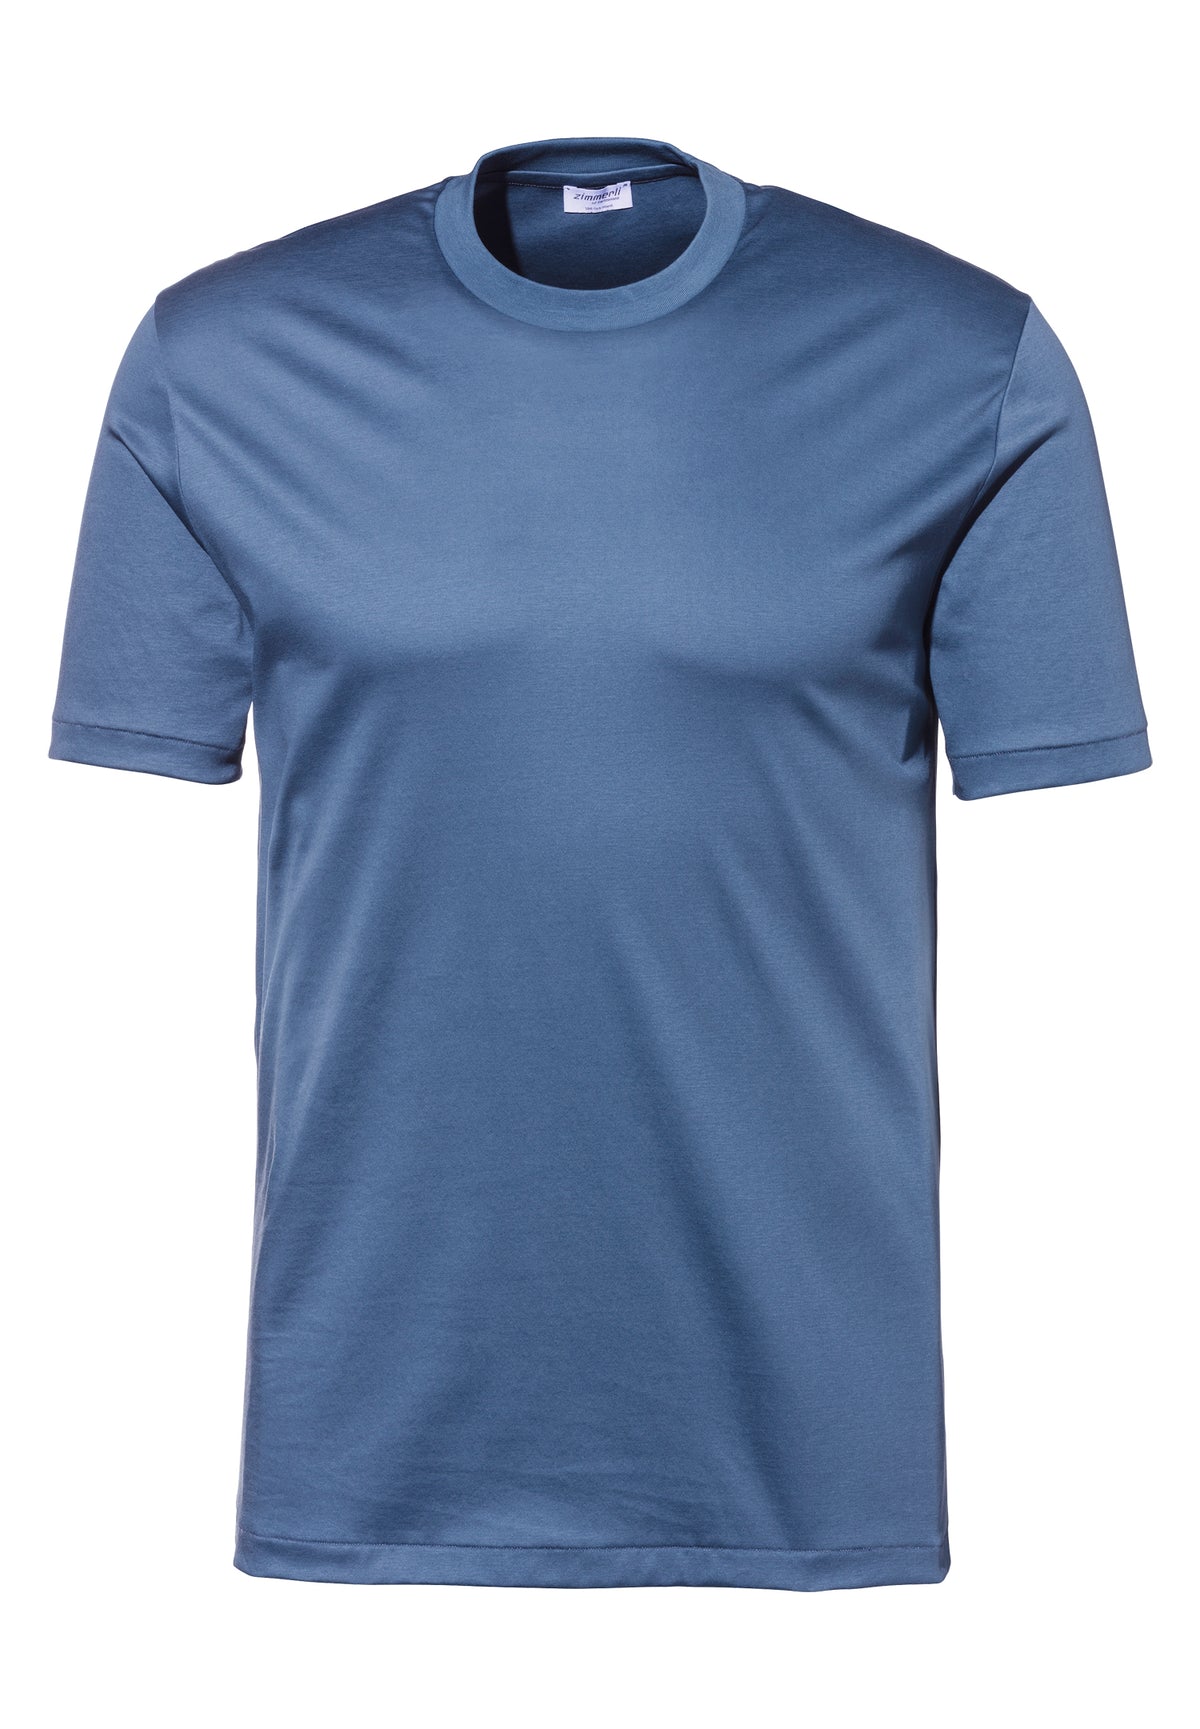 Sea Island | T-Shirt kurzarm - island blue